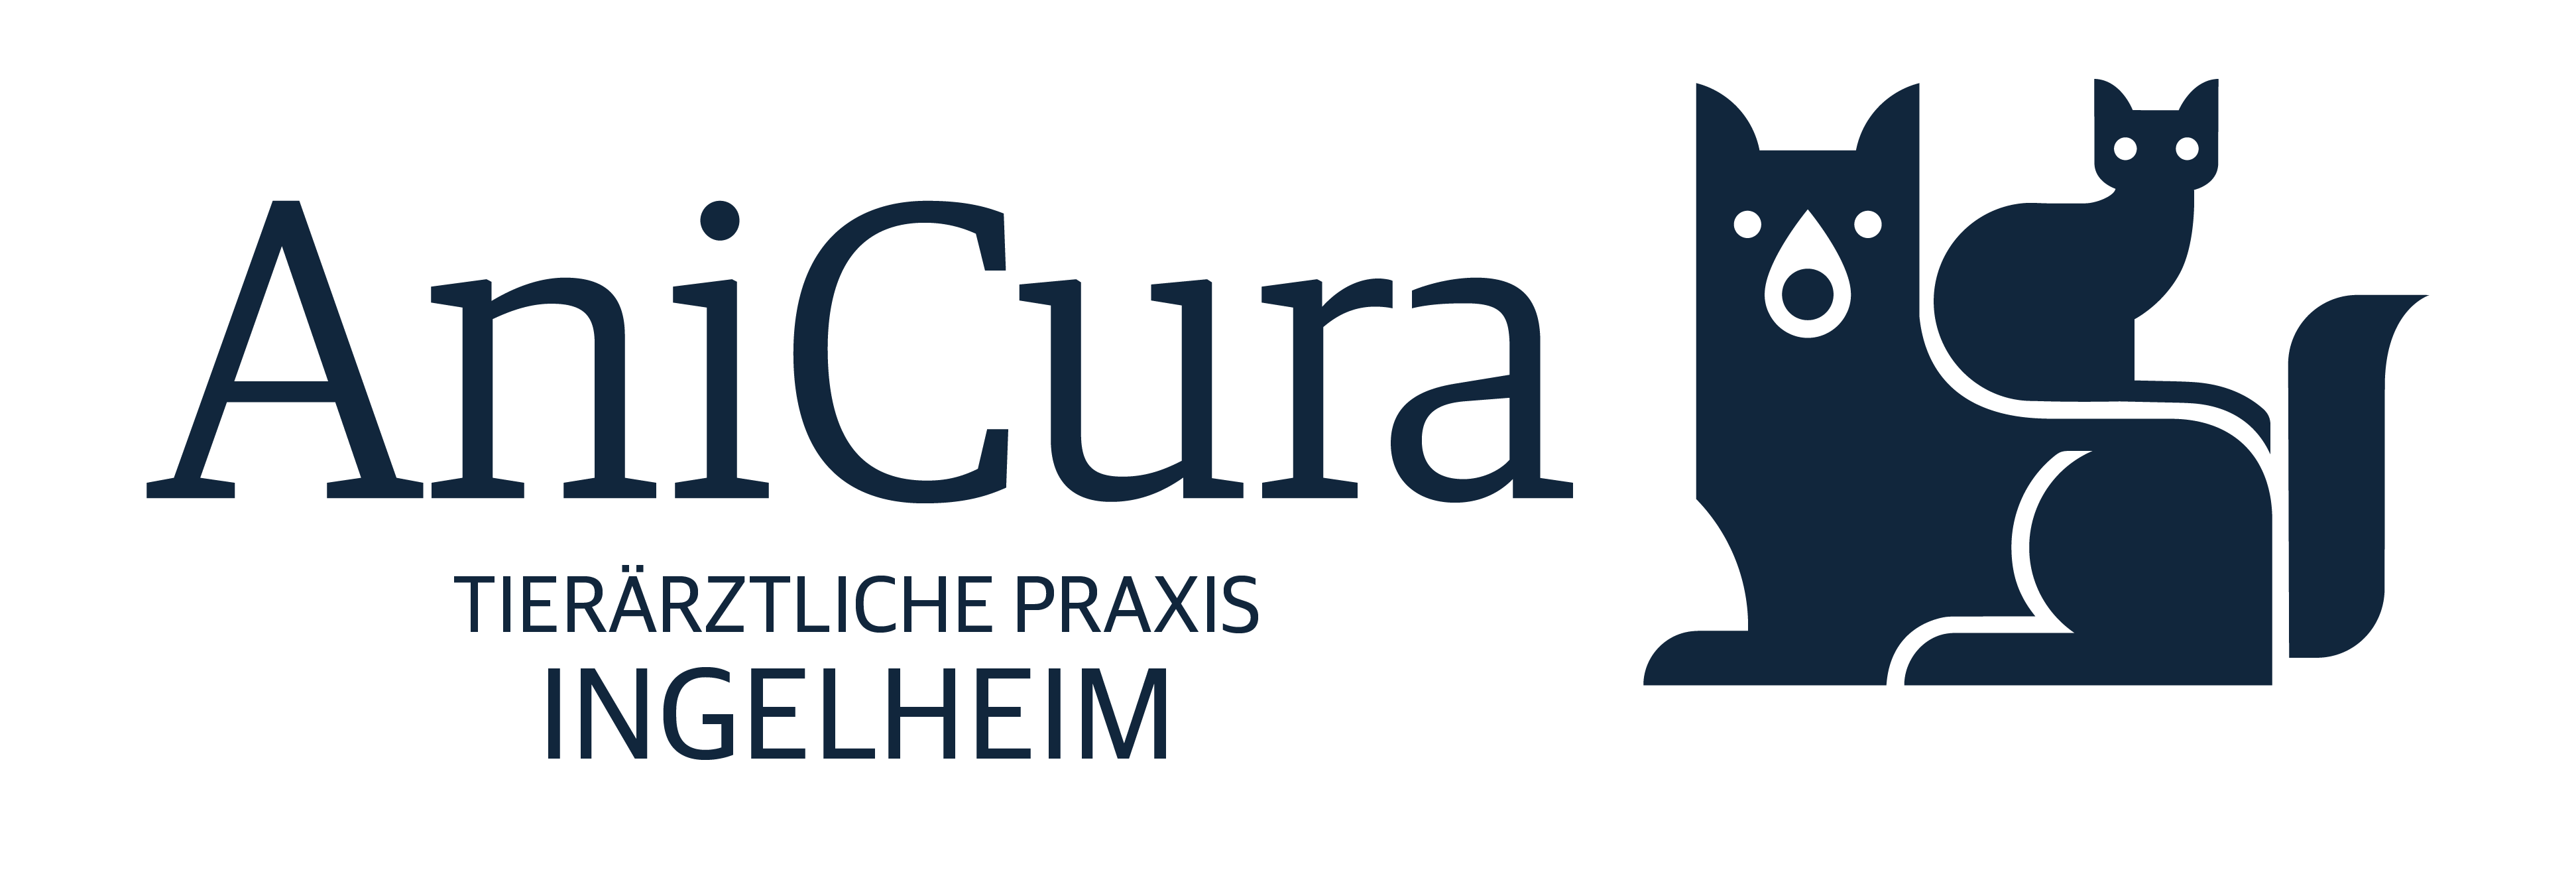 AniCura Ingelheim logo